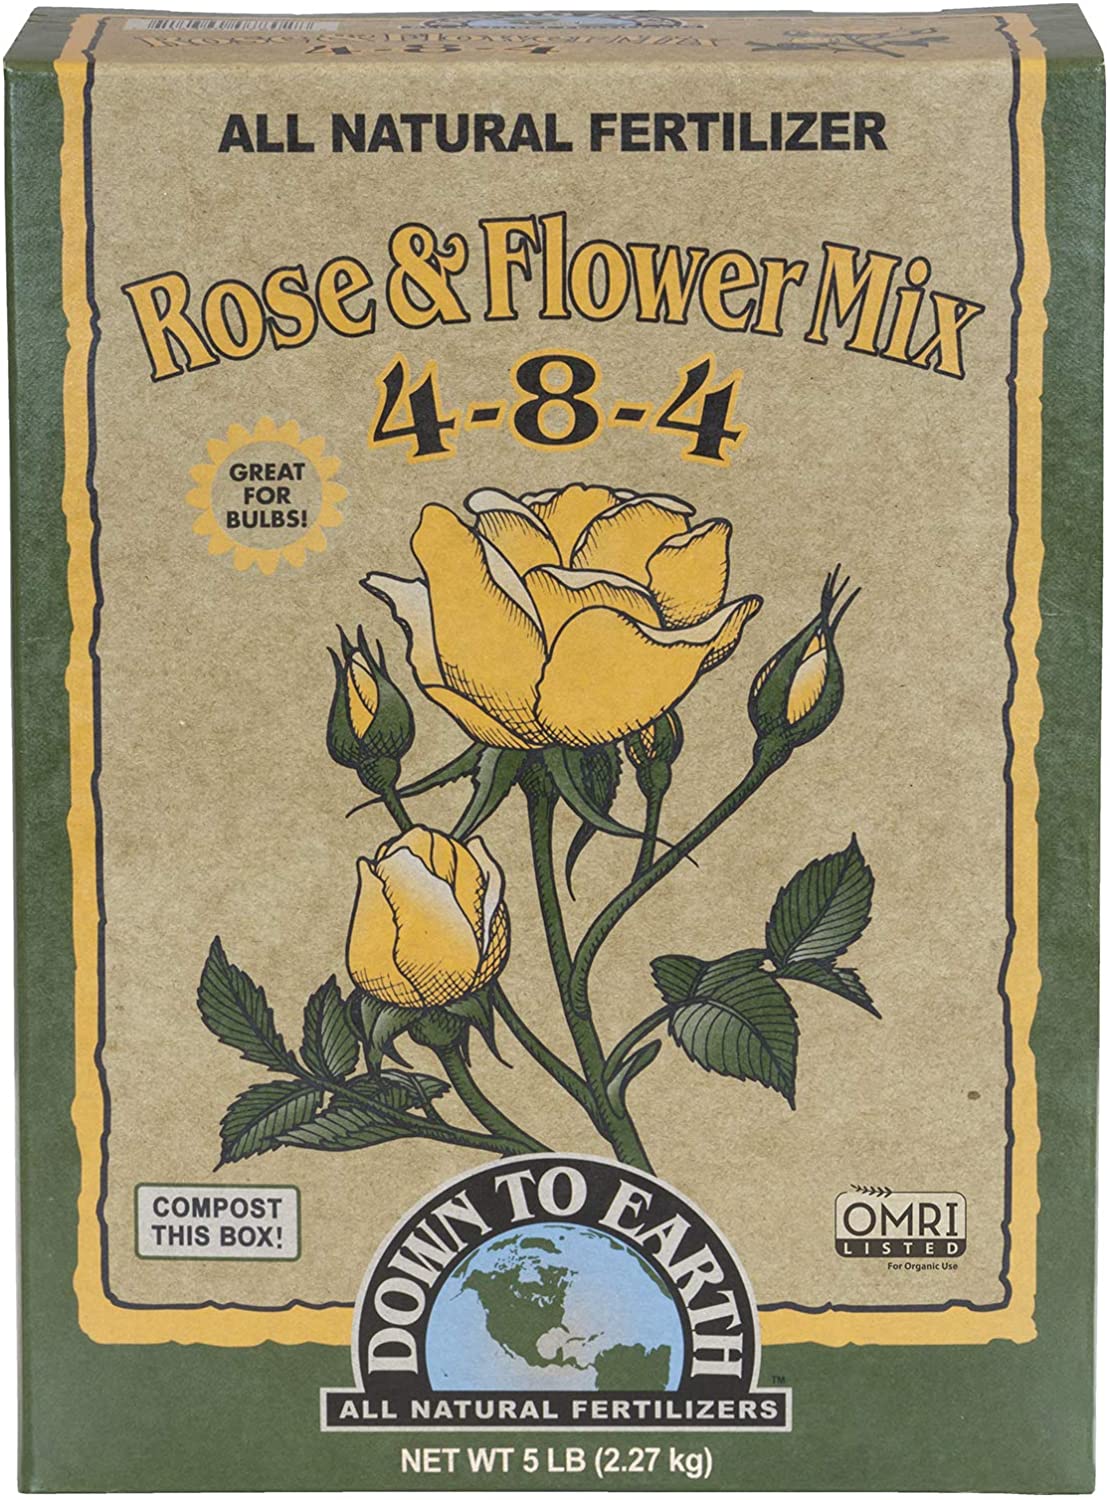  Down to Earth Organic Rose & Flower Fertilizer